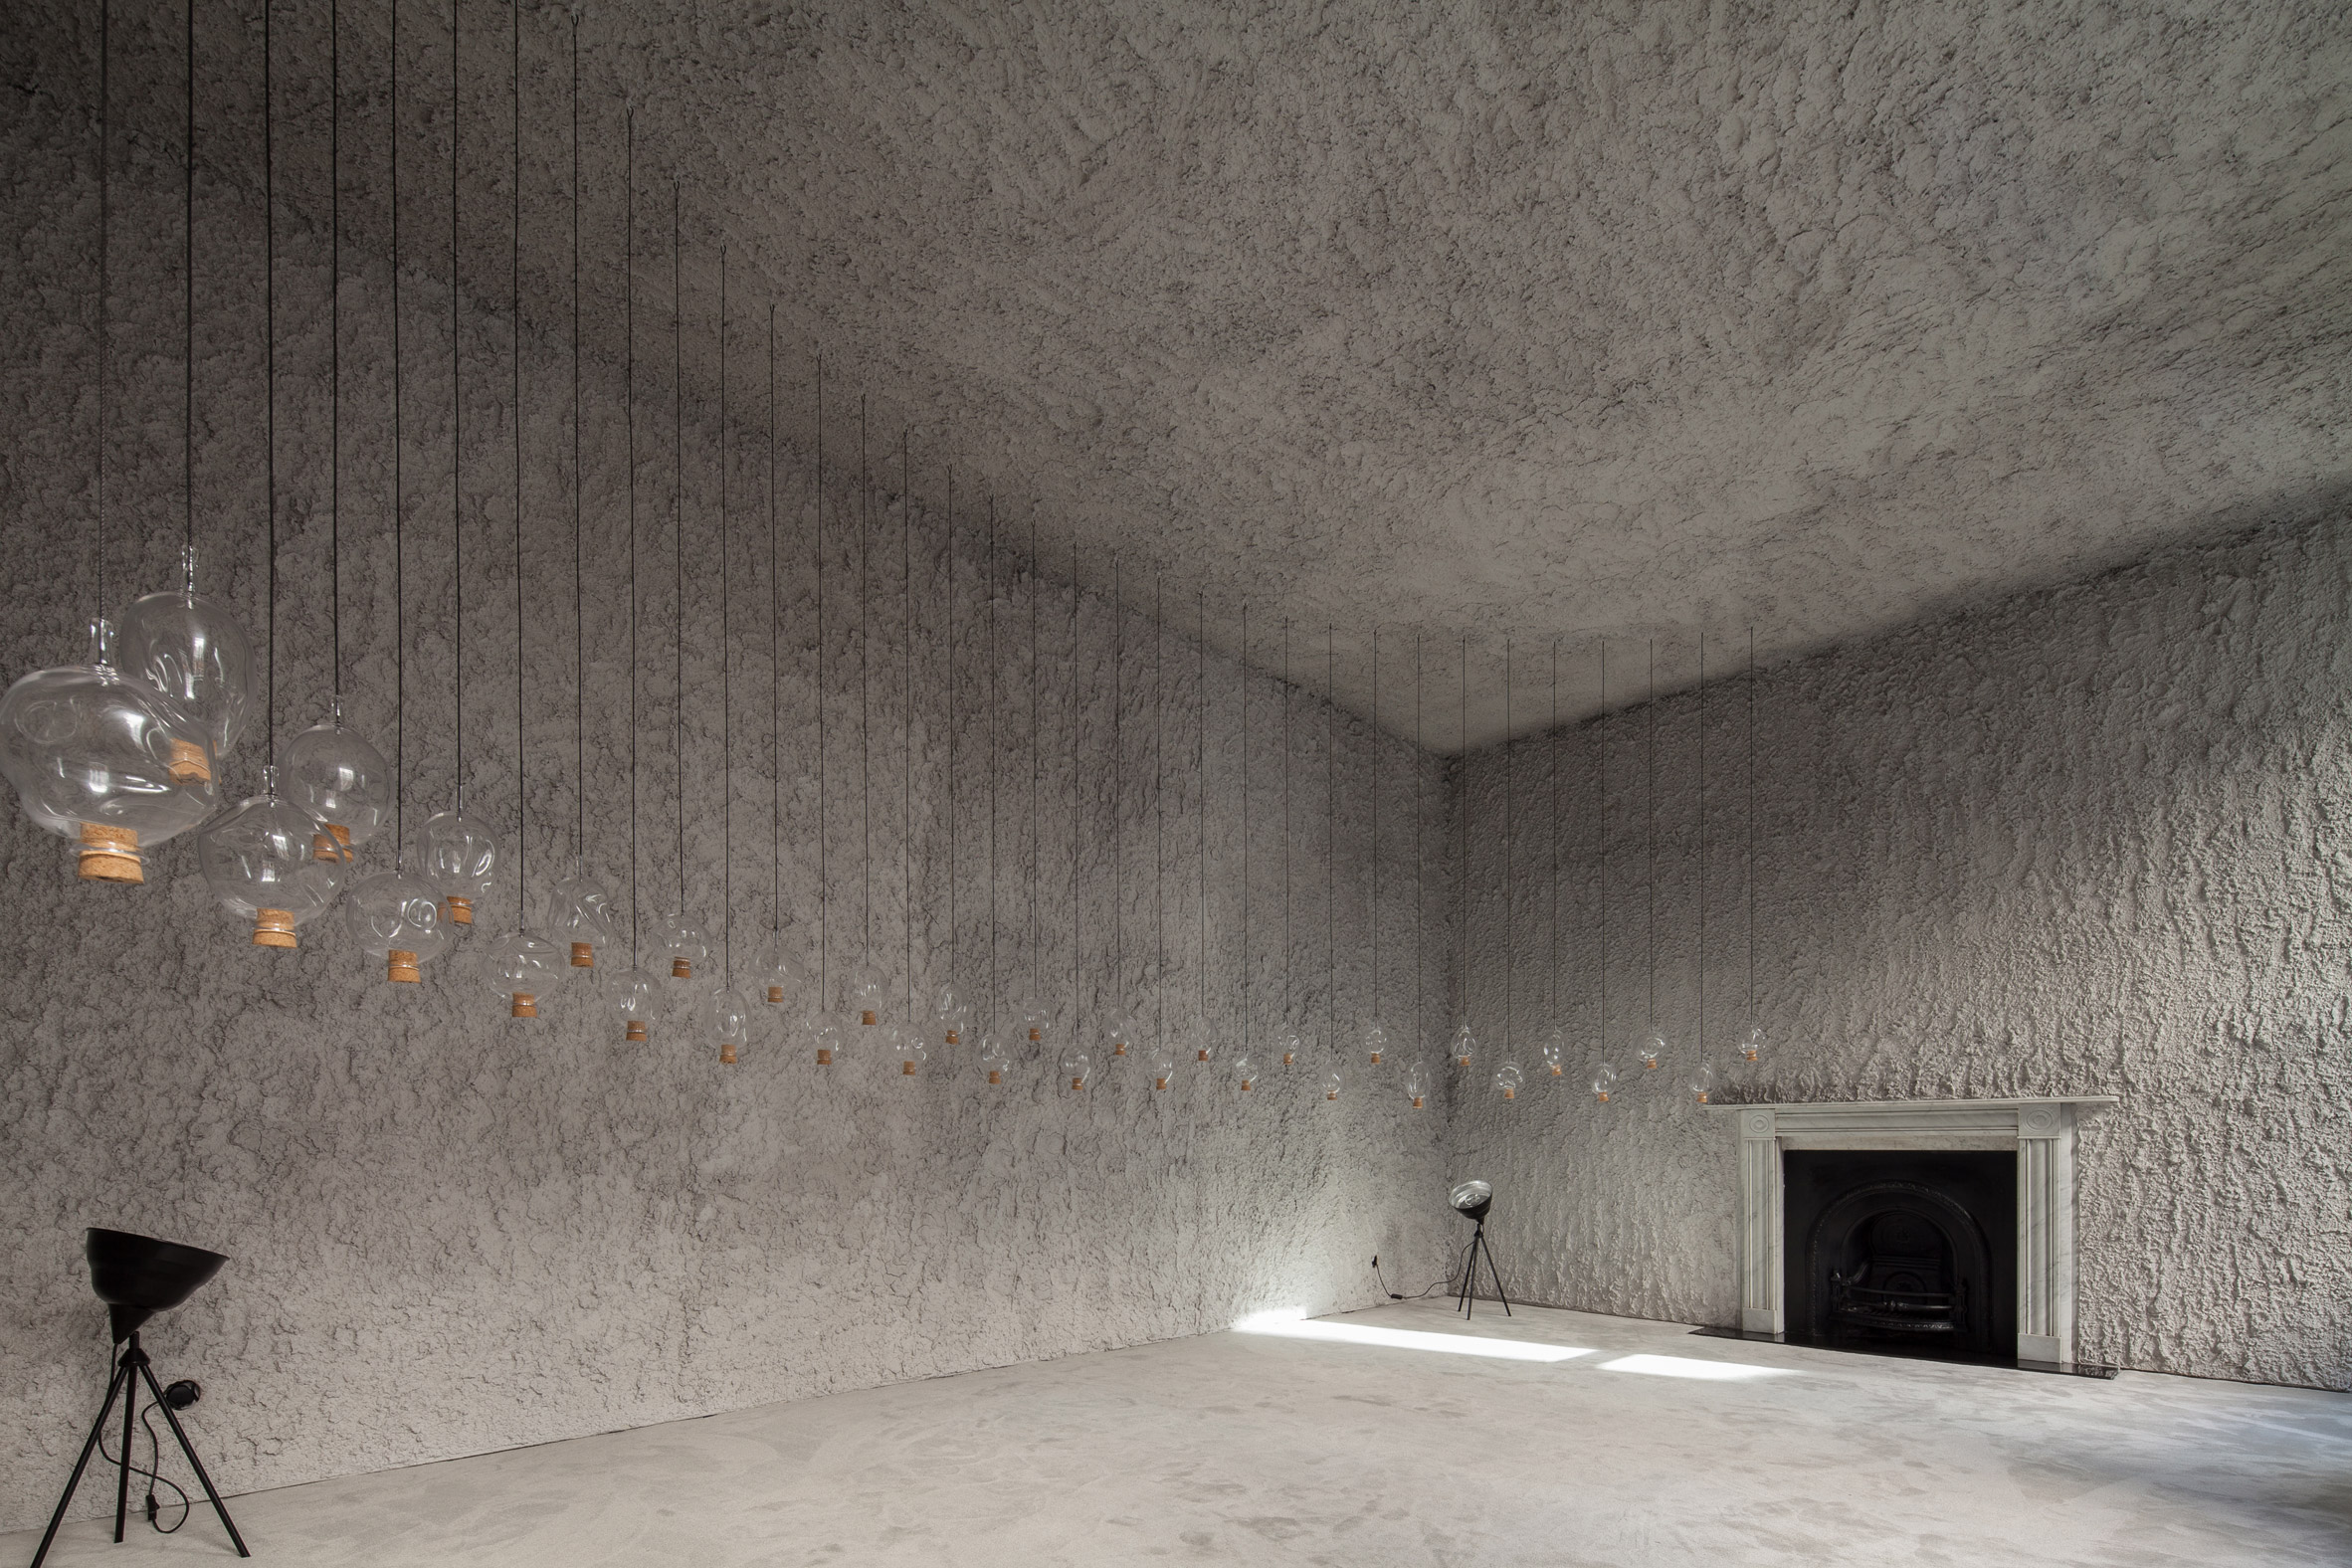 antonino-cardillo-pics-house-of-dust-and-illuminum-gallery-architecture_dezeen_2364_col_1